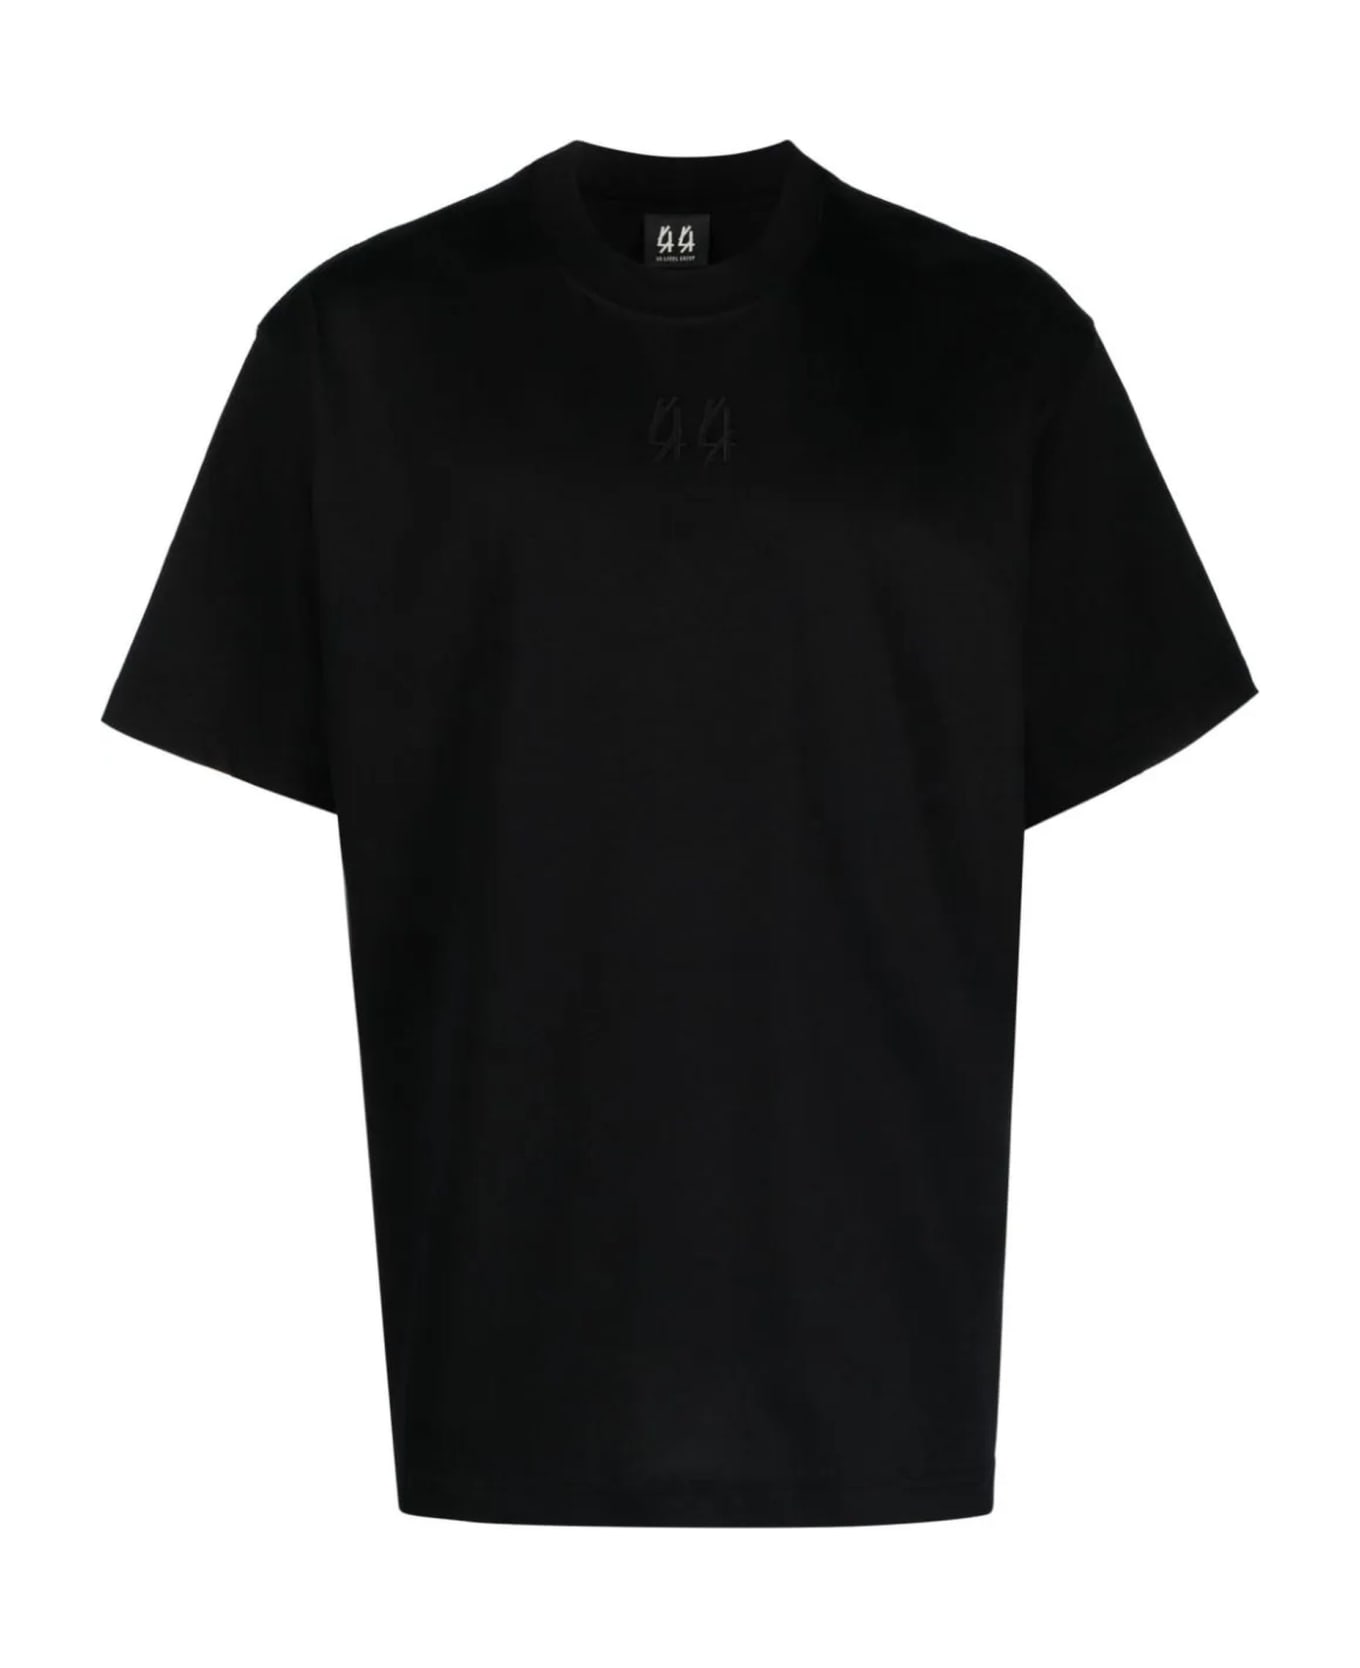 44 Label Group Black Cotton T-shirt - Black+the enemy print シャツ